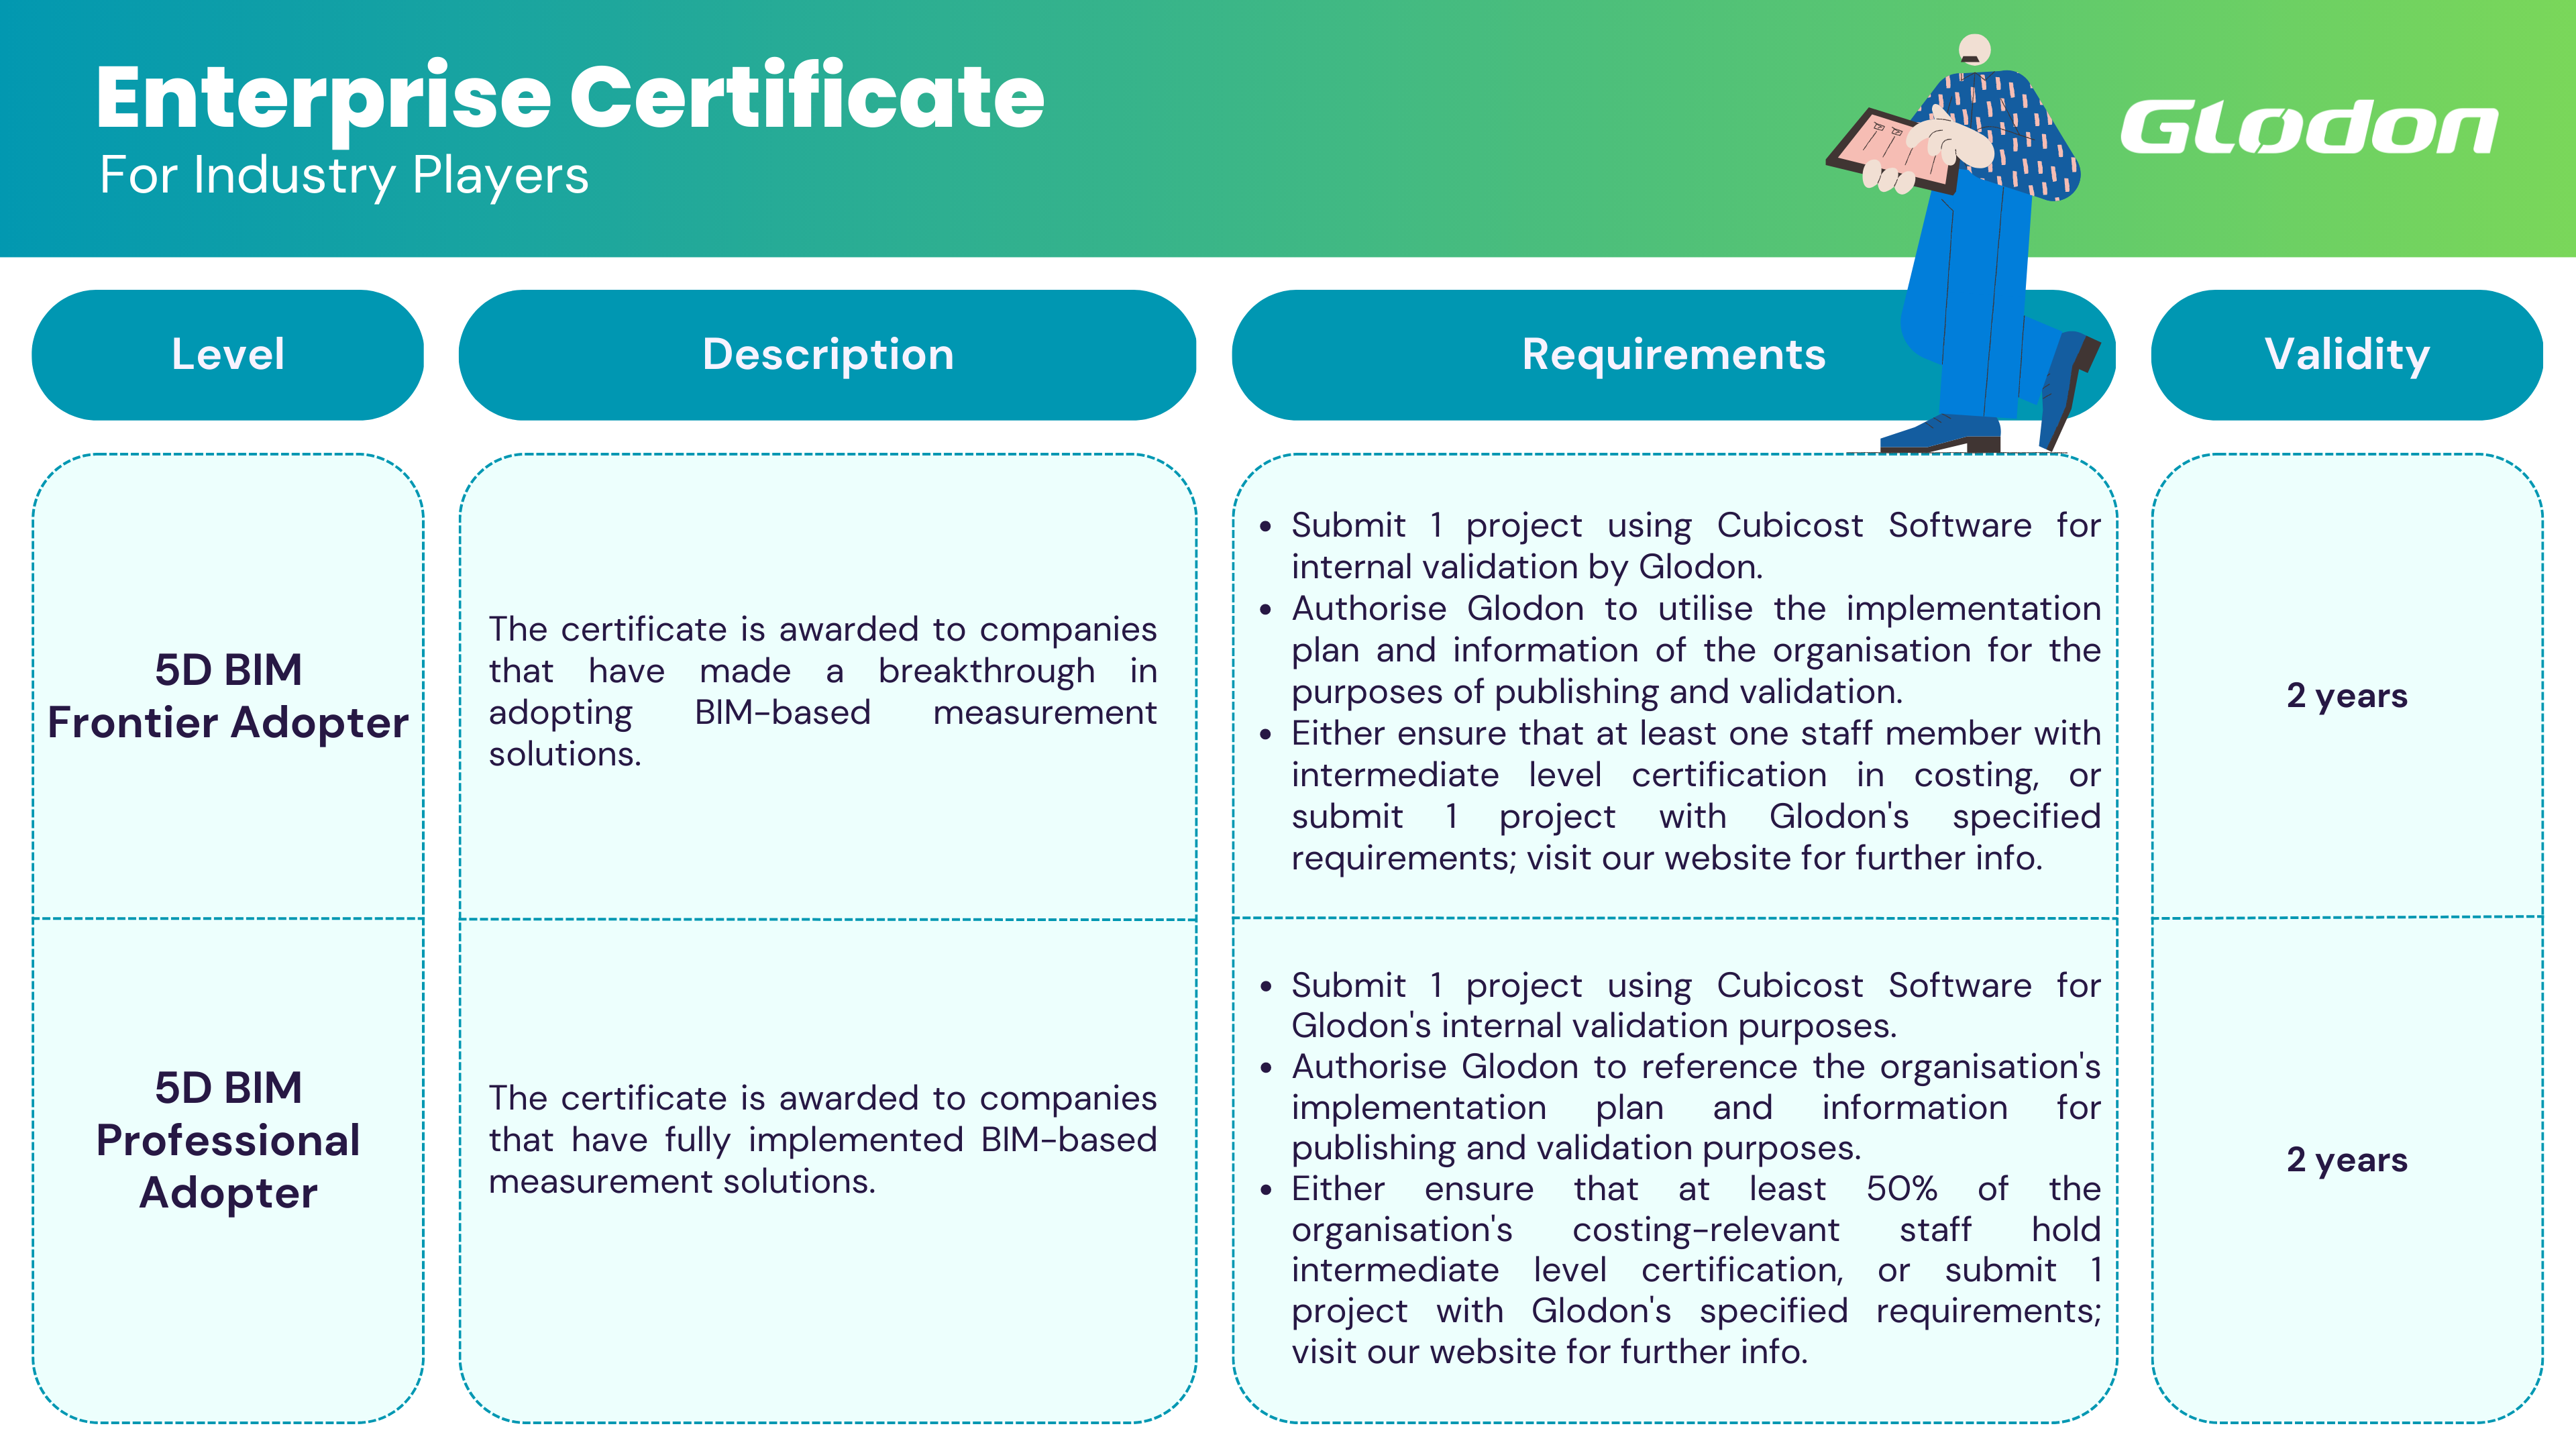 Glodon Enterprise Certificate for Companies